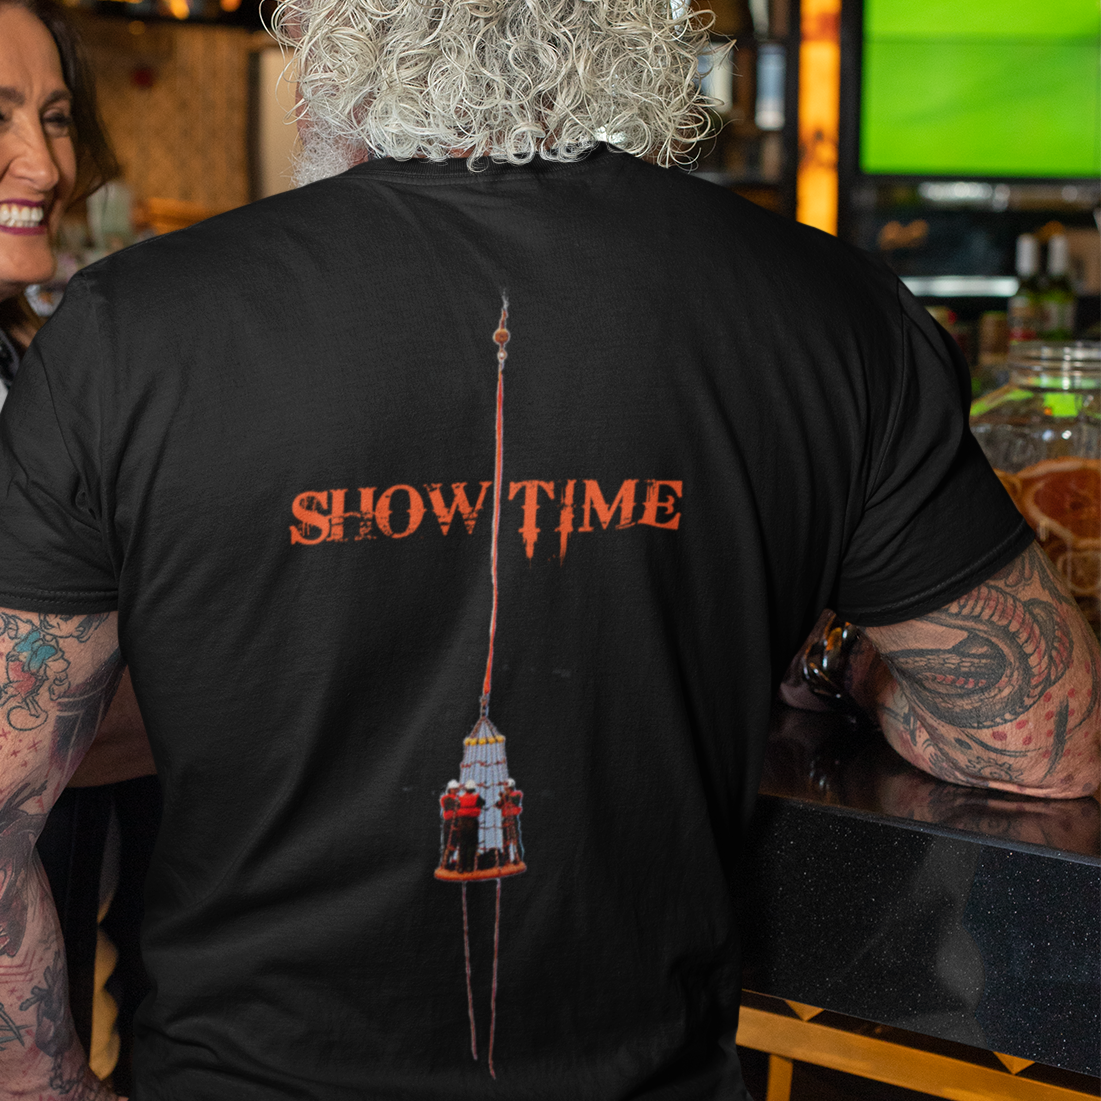 Show Time T-Shirt